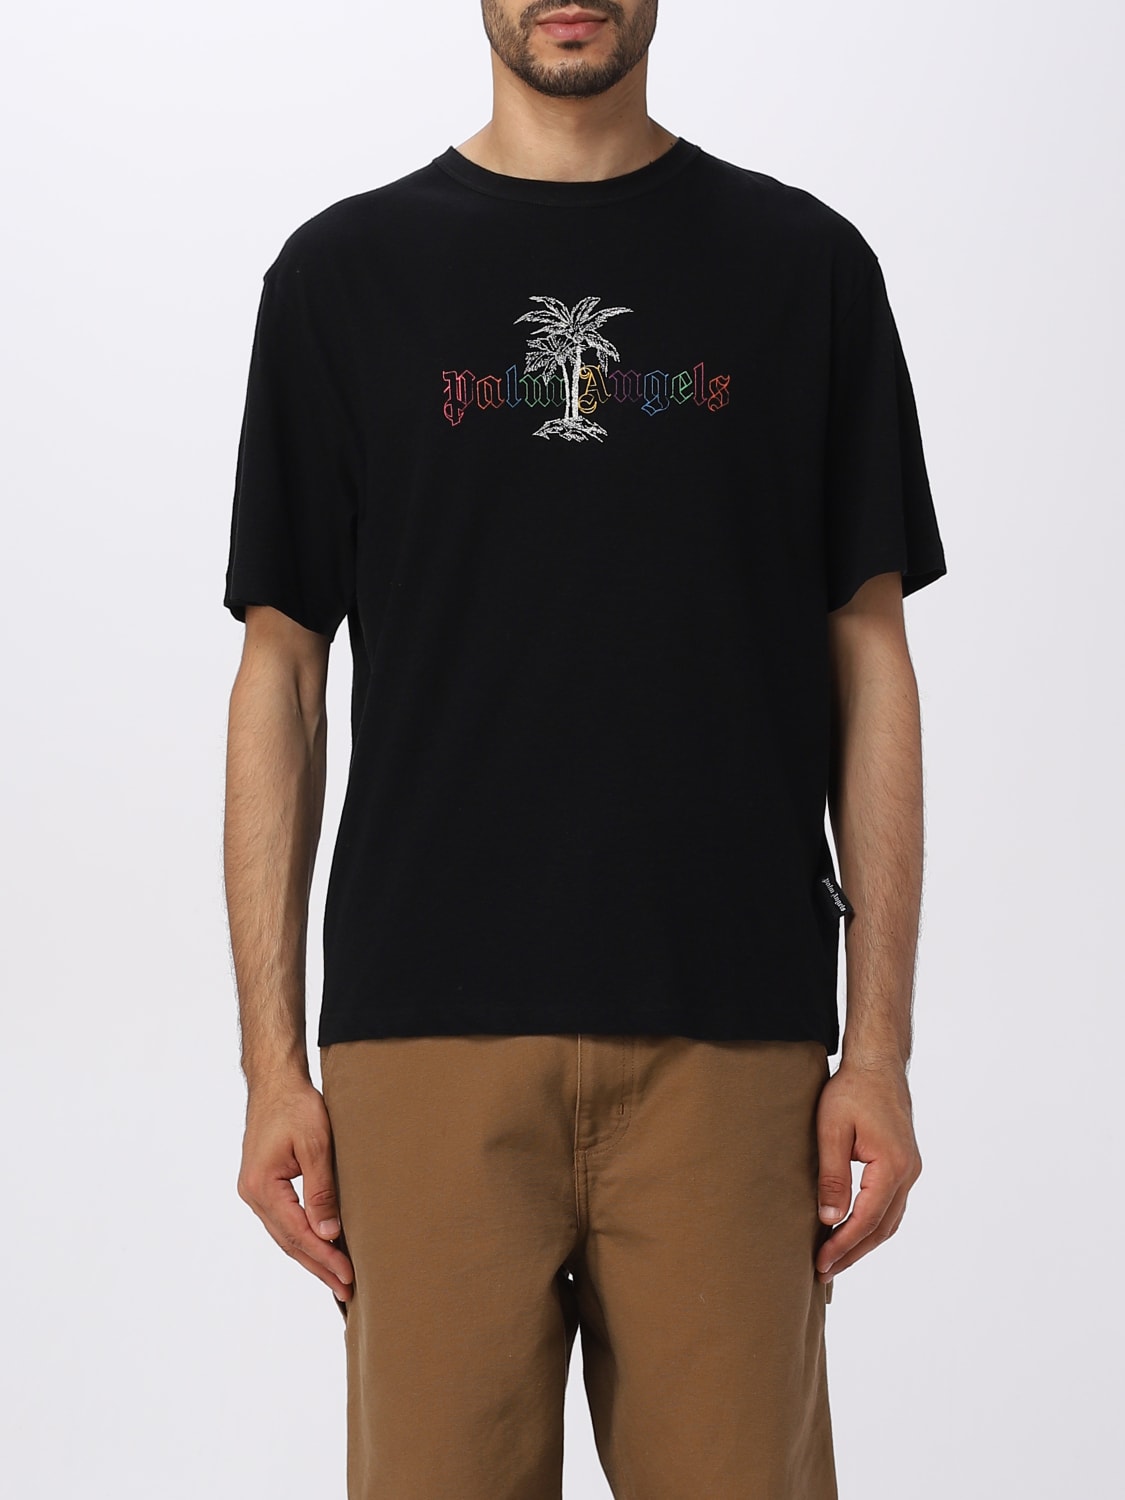 PALM ANGELS: t-shirt for men - Black | Palm Angels t-shirt ...